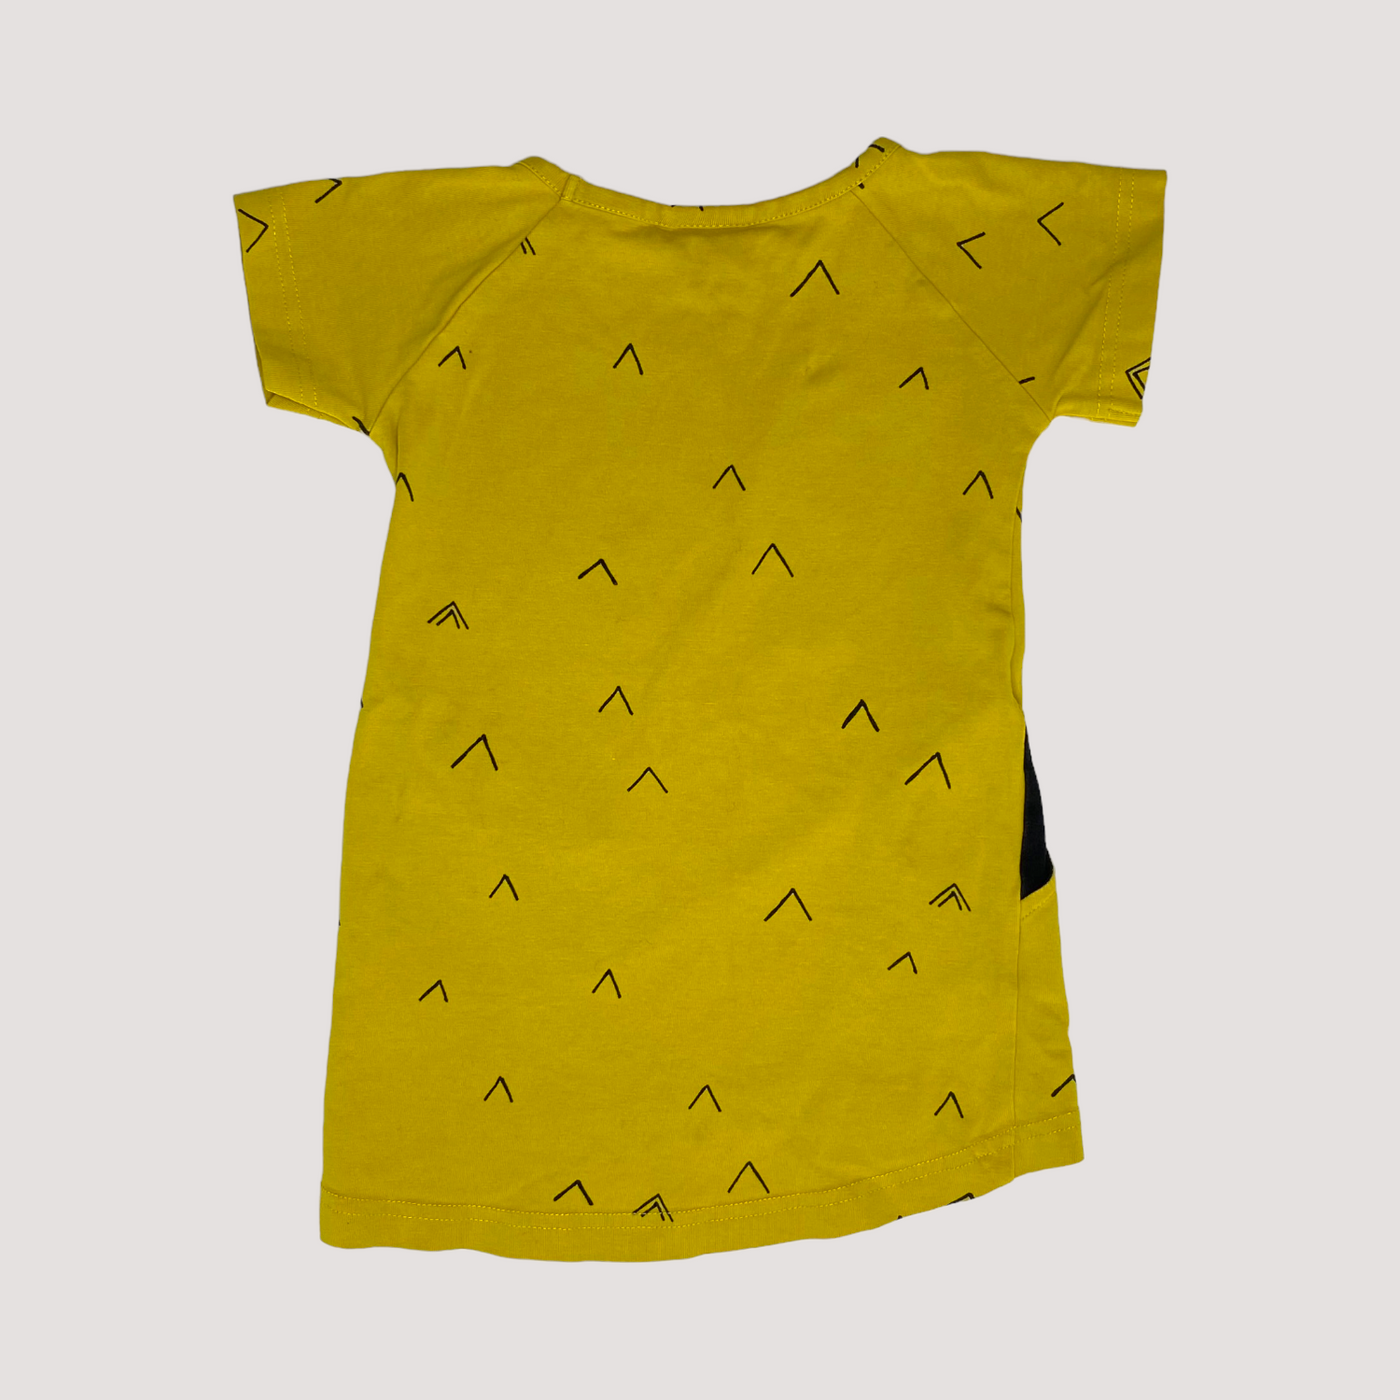 Papu dress, yellow/black | 74/80cm